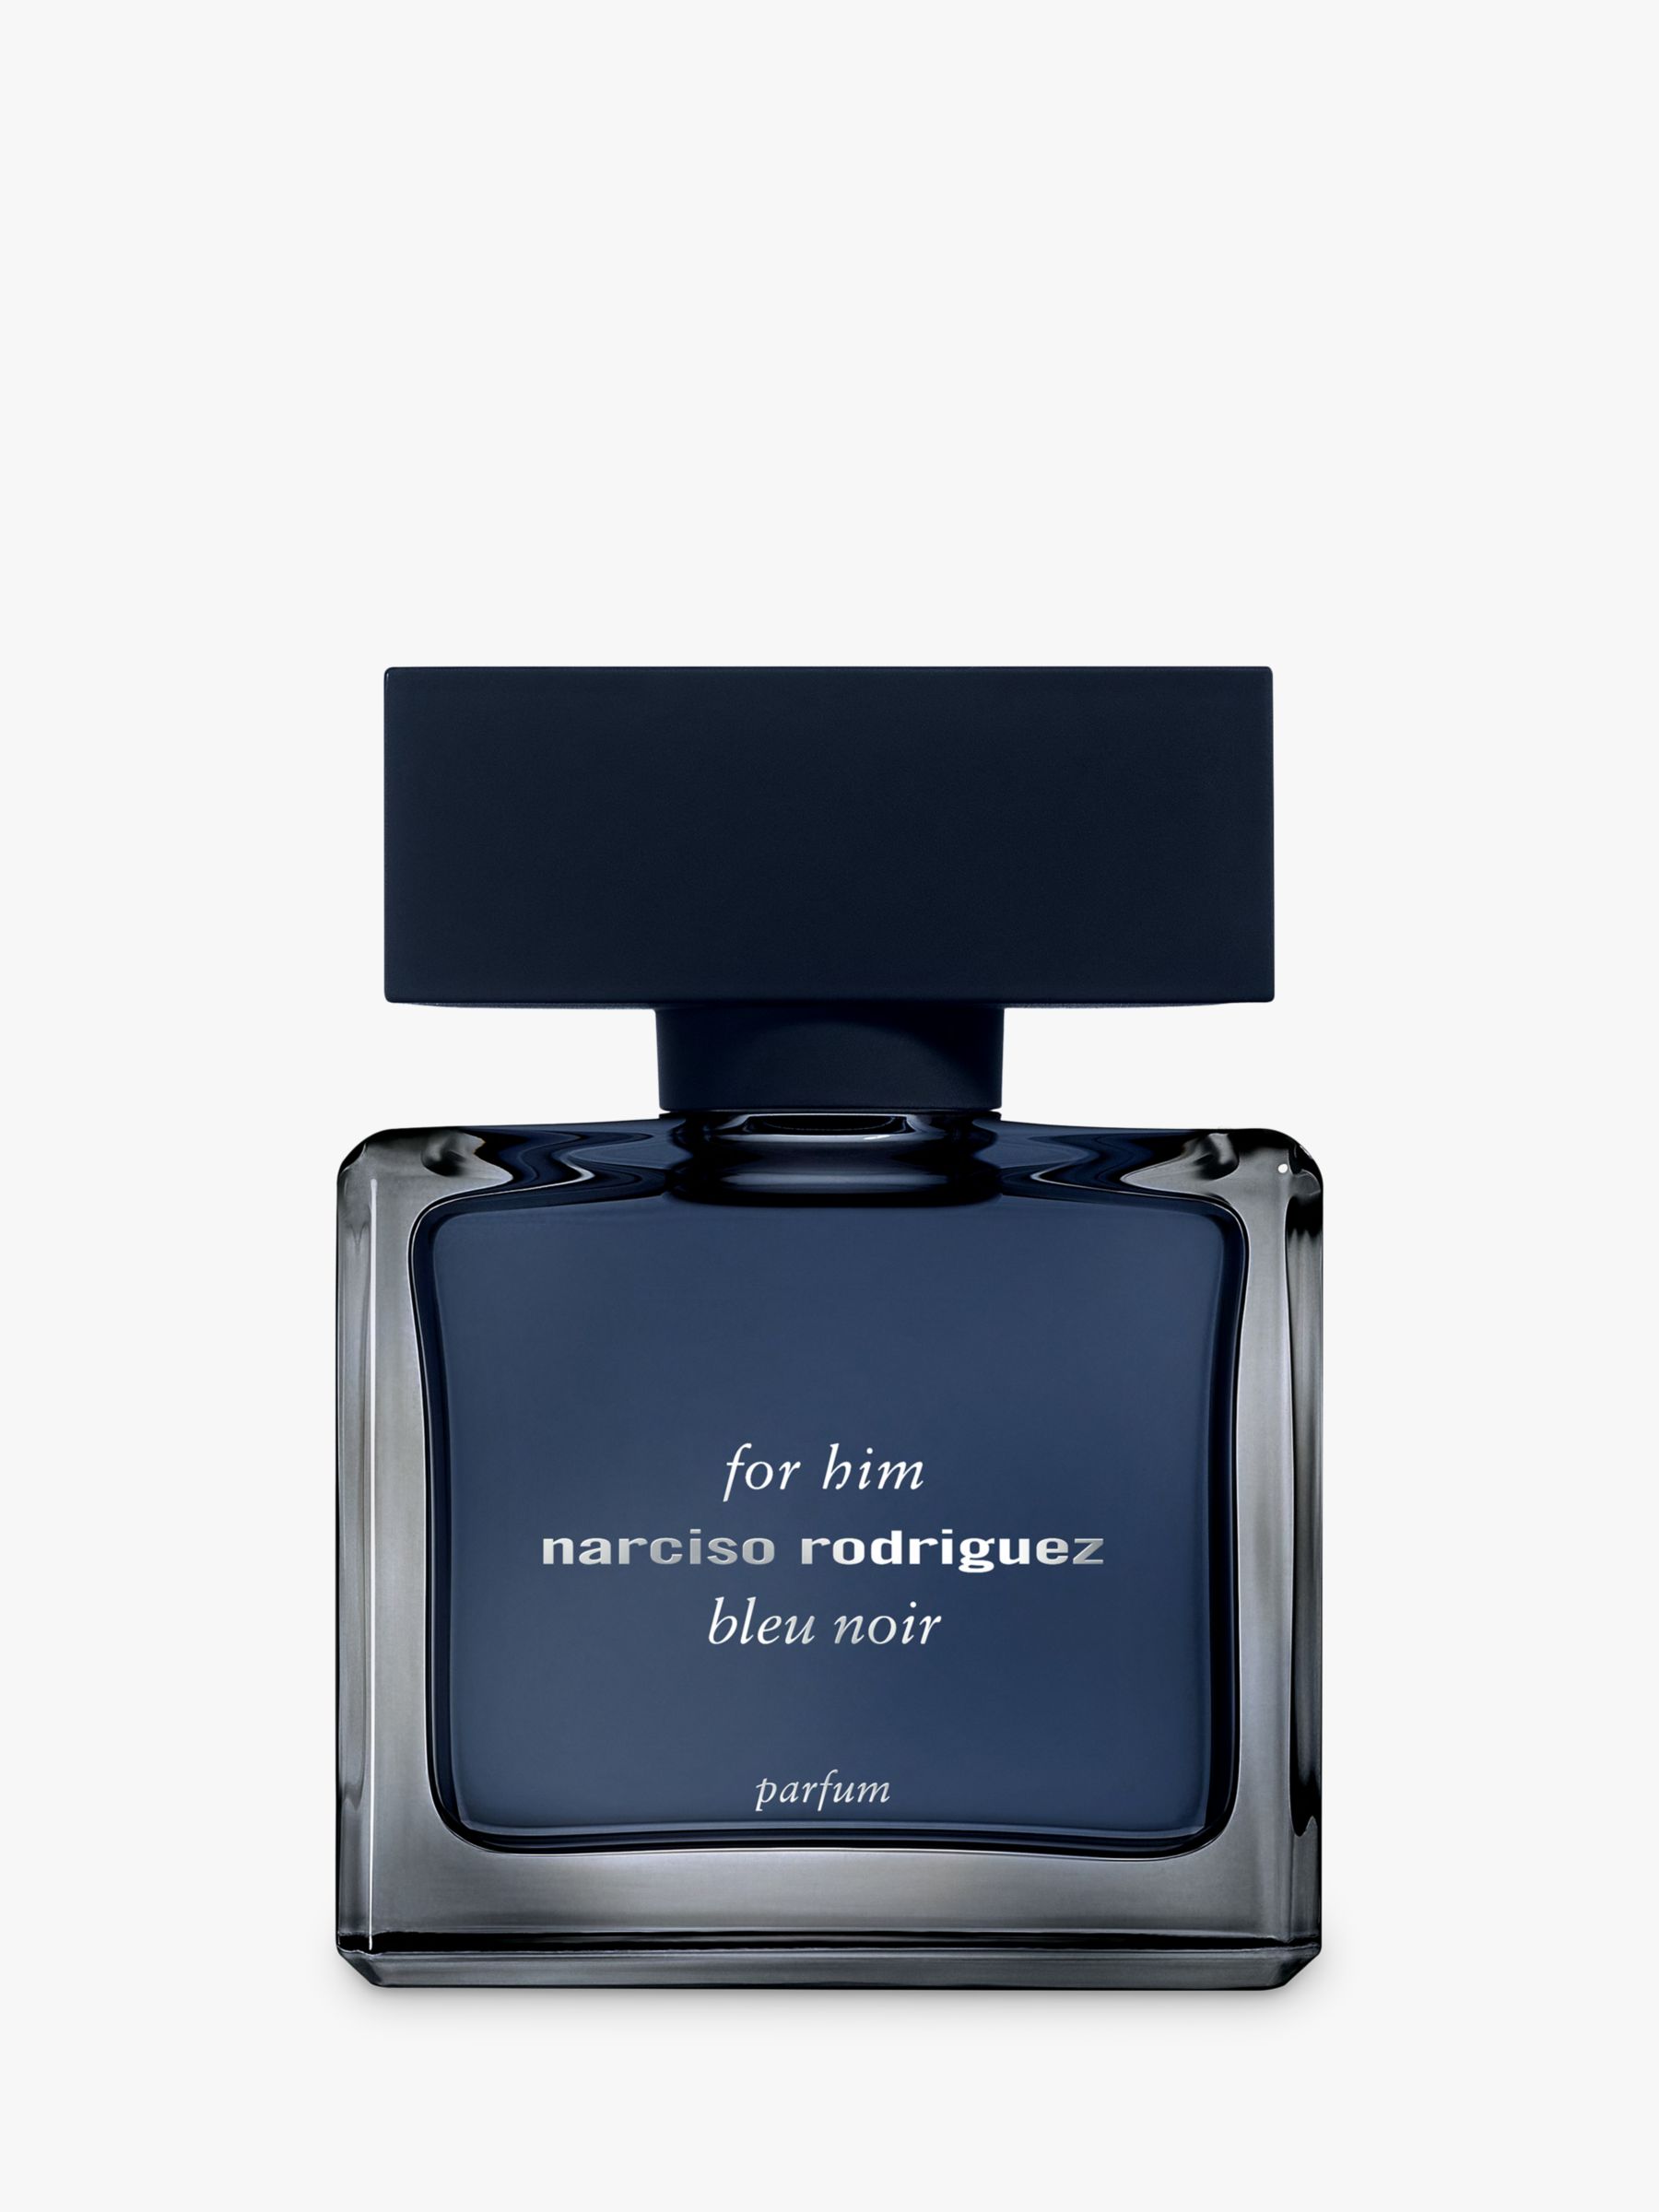 Narciso Rodriguez for Him Bleu Noir EDT Perfume Review